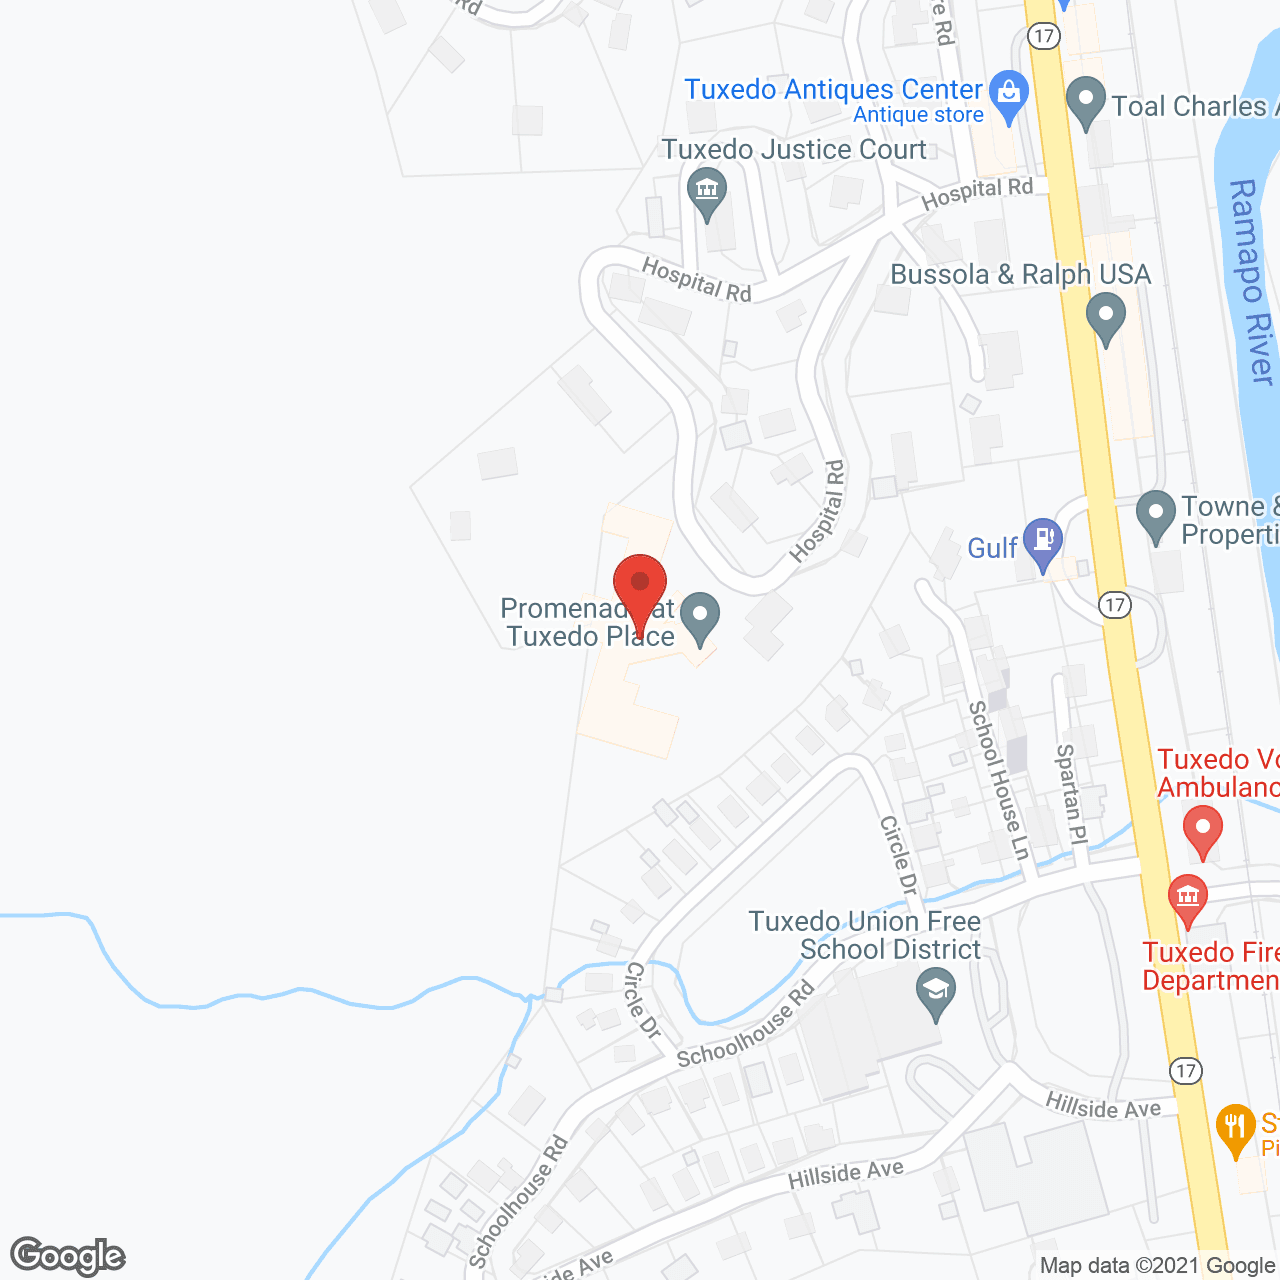 Promenade at Tuxedo Place in google map